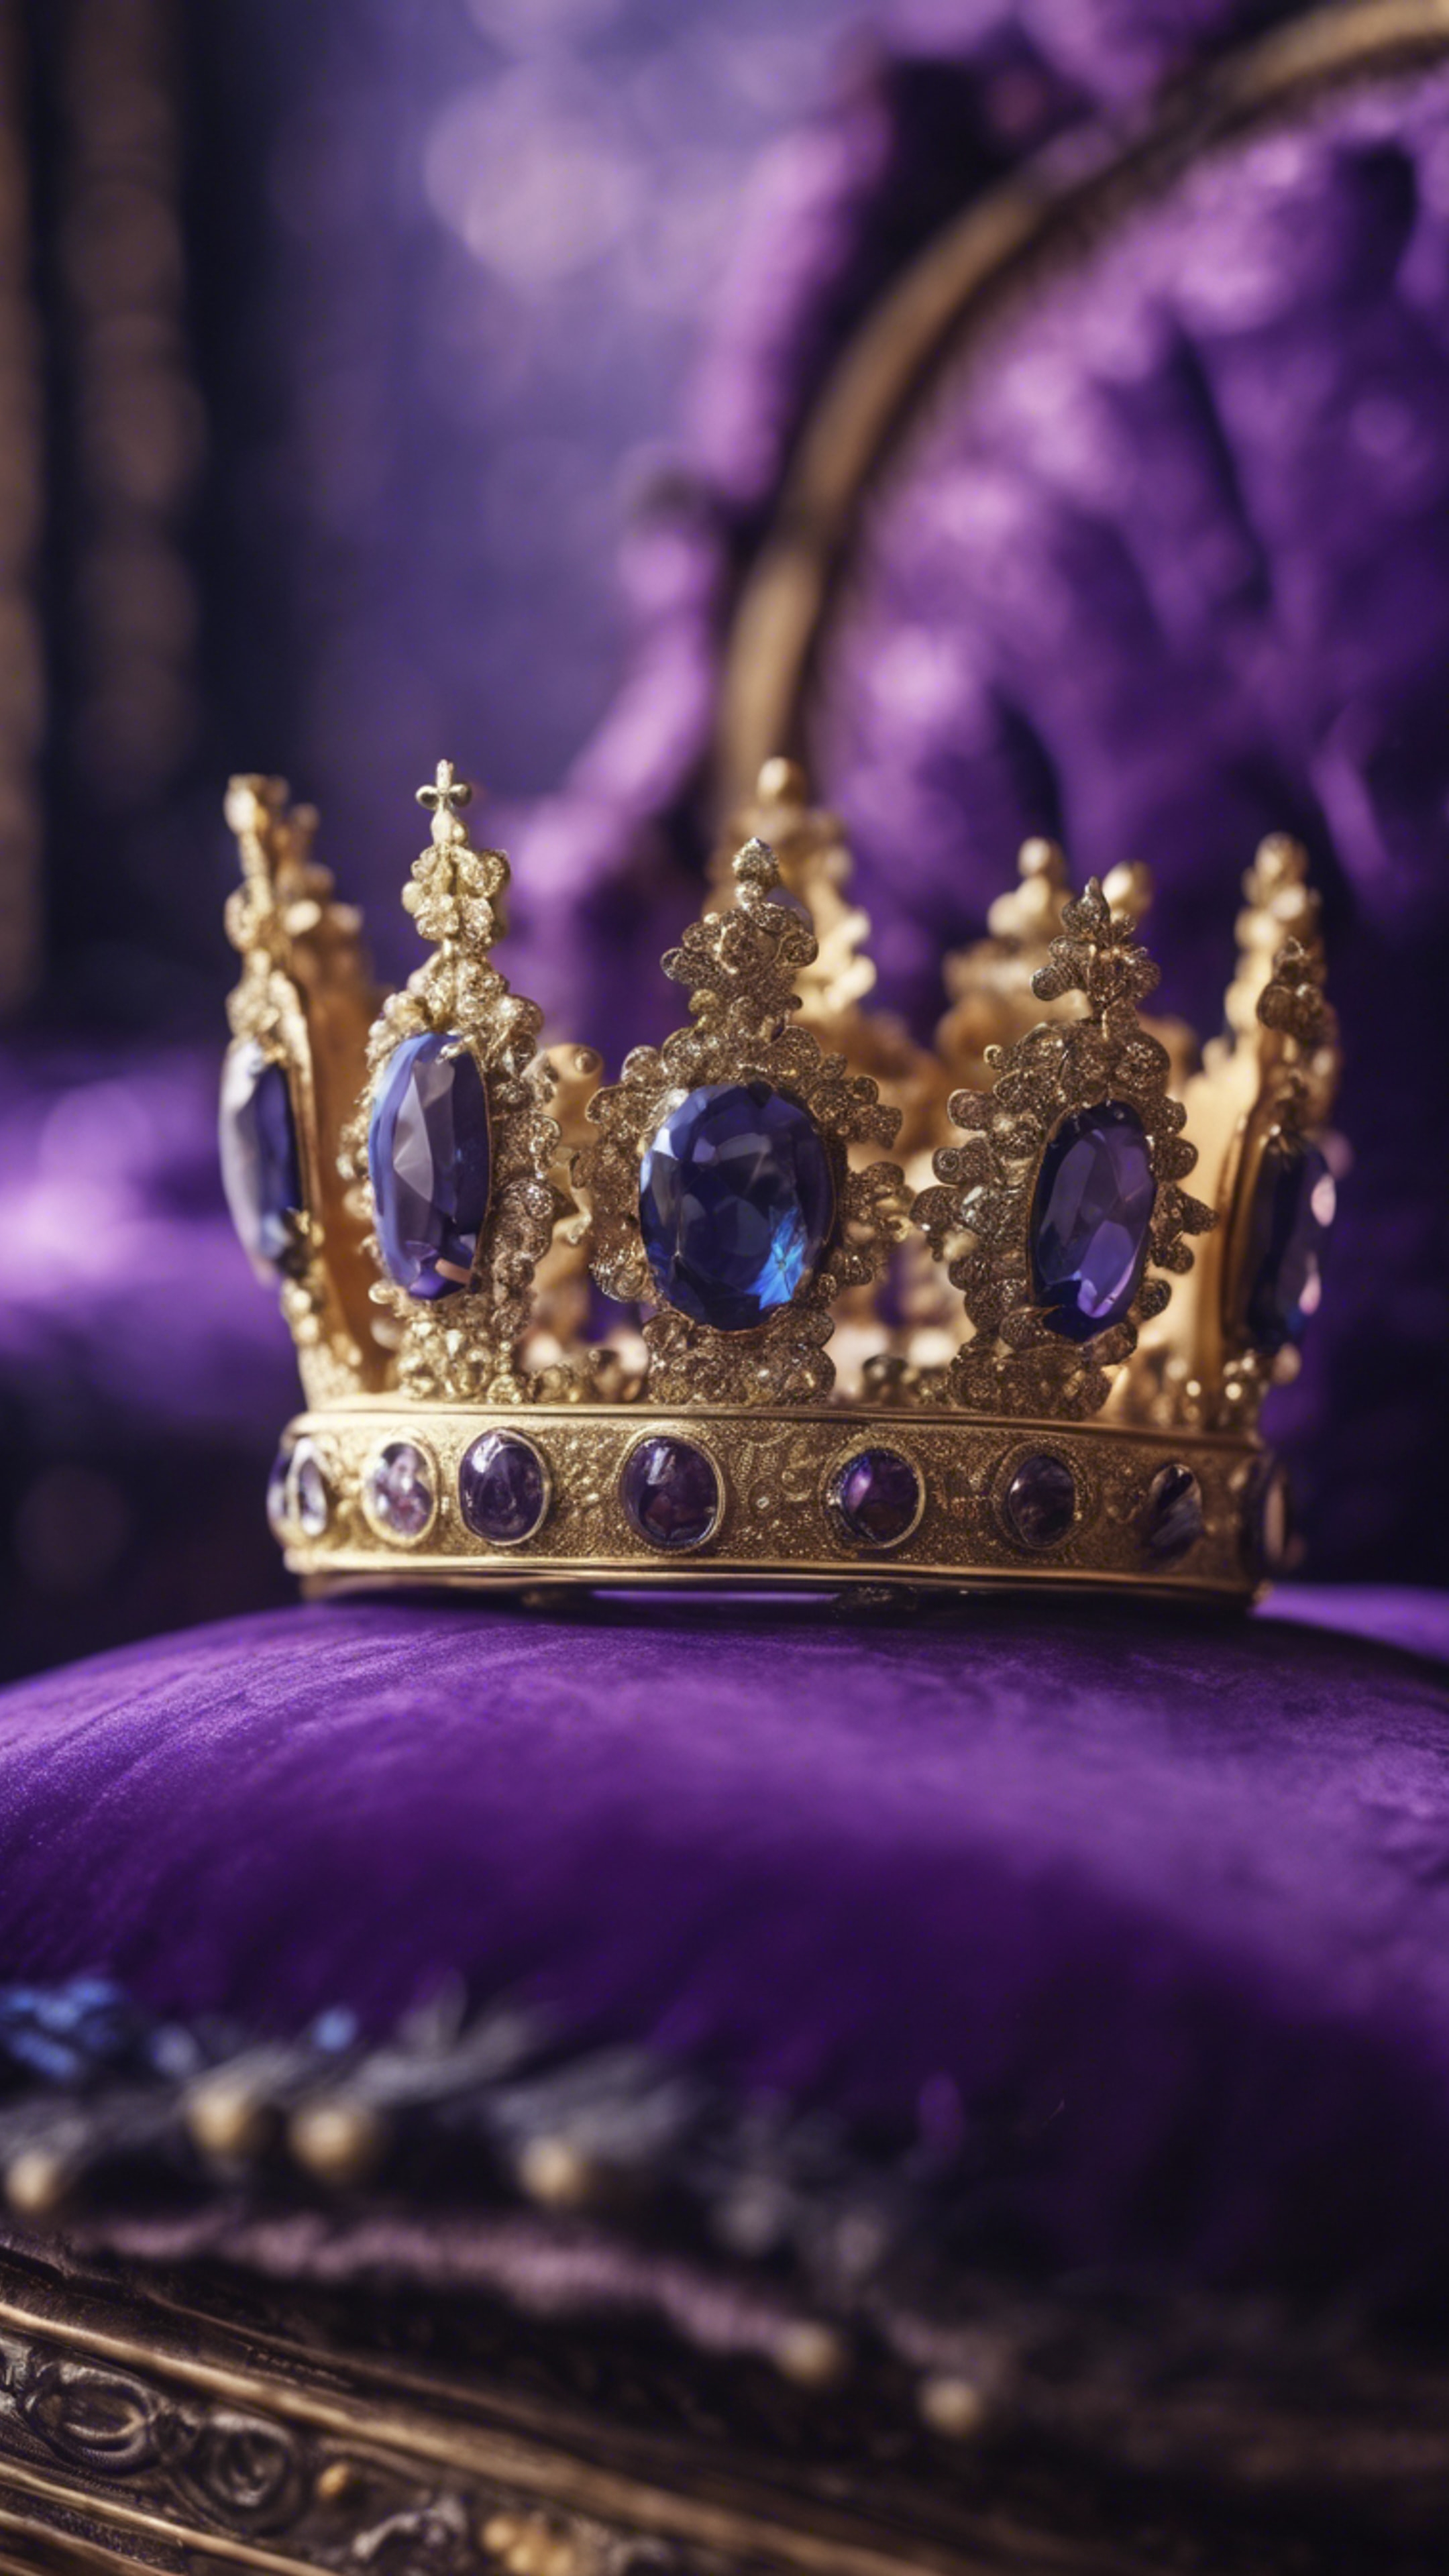 A queen's exquisite sapphire crown on a royal purple velvet pillow. duvar kağıdı[d728a58e3467470aa0af]